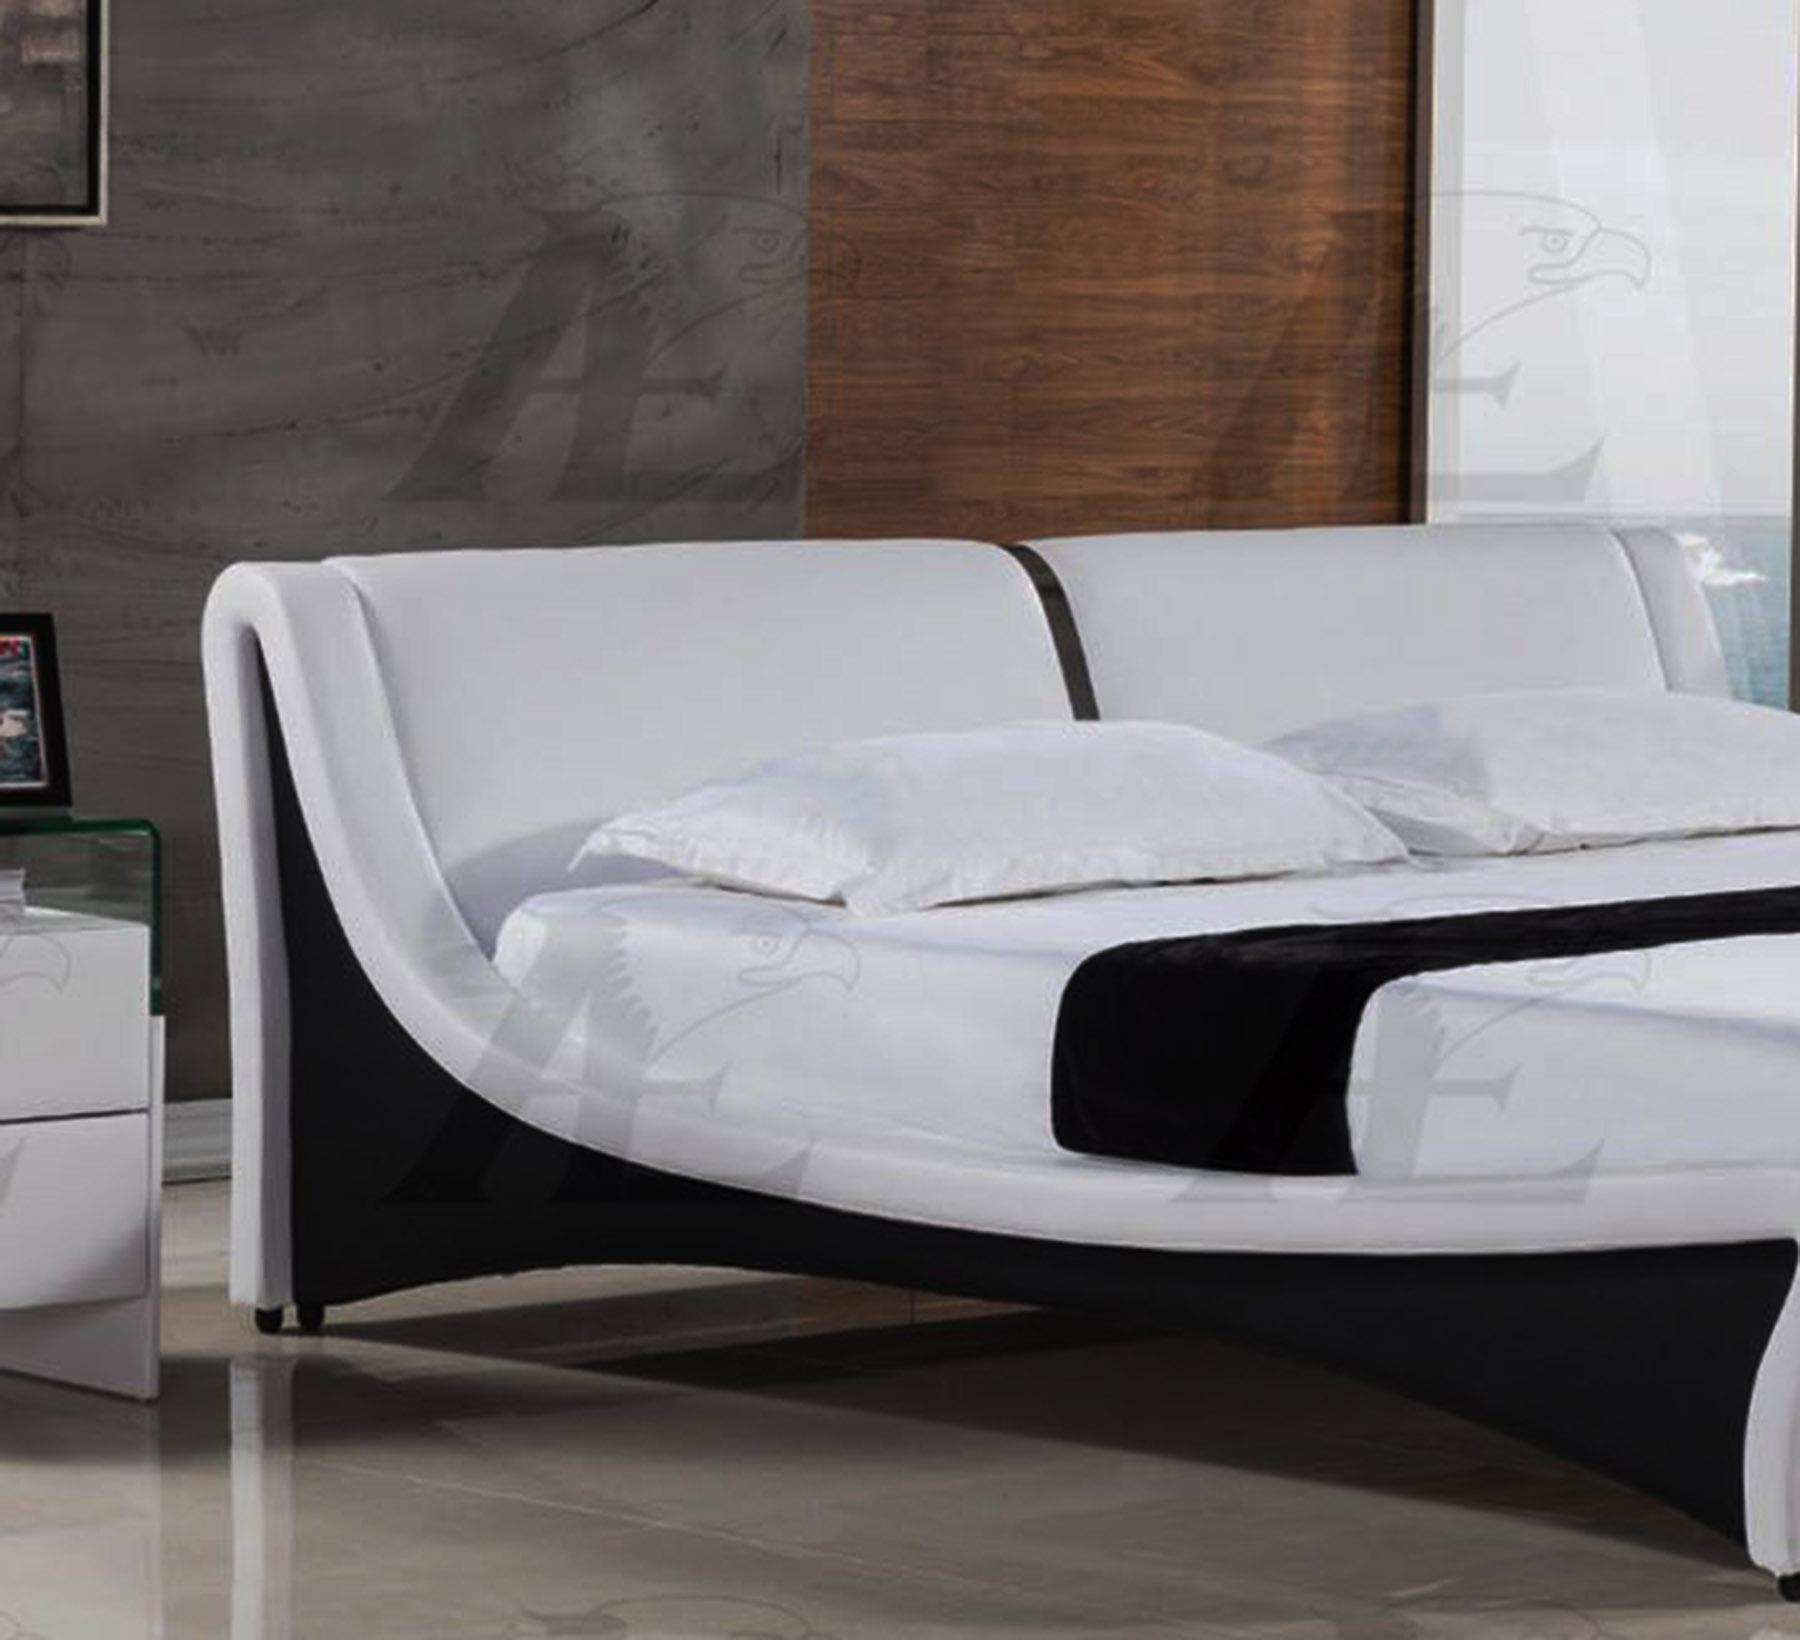 

    
American Eagle Furniture AE B-D039-EK Platform Bed White AE B-D039-EK
